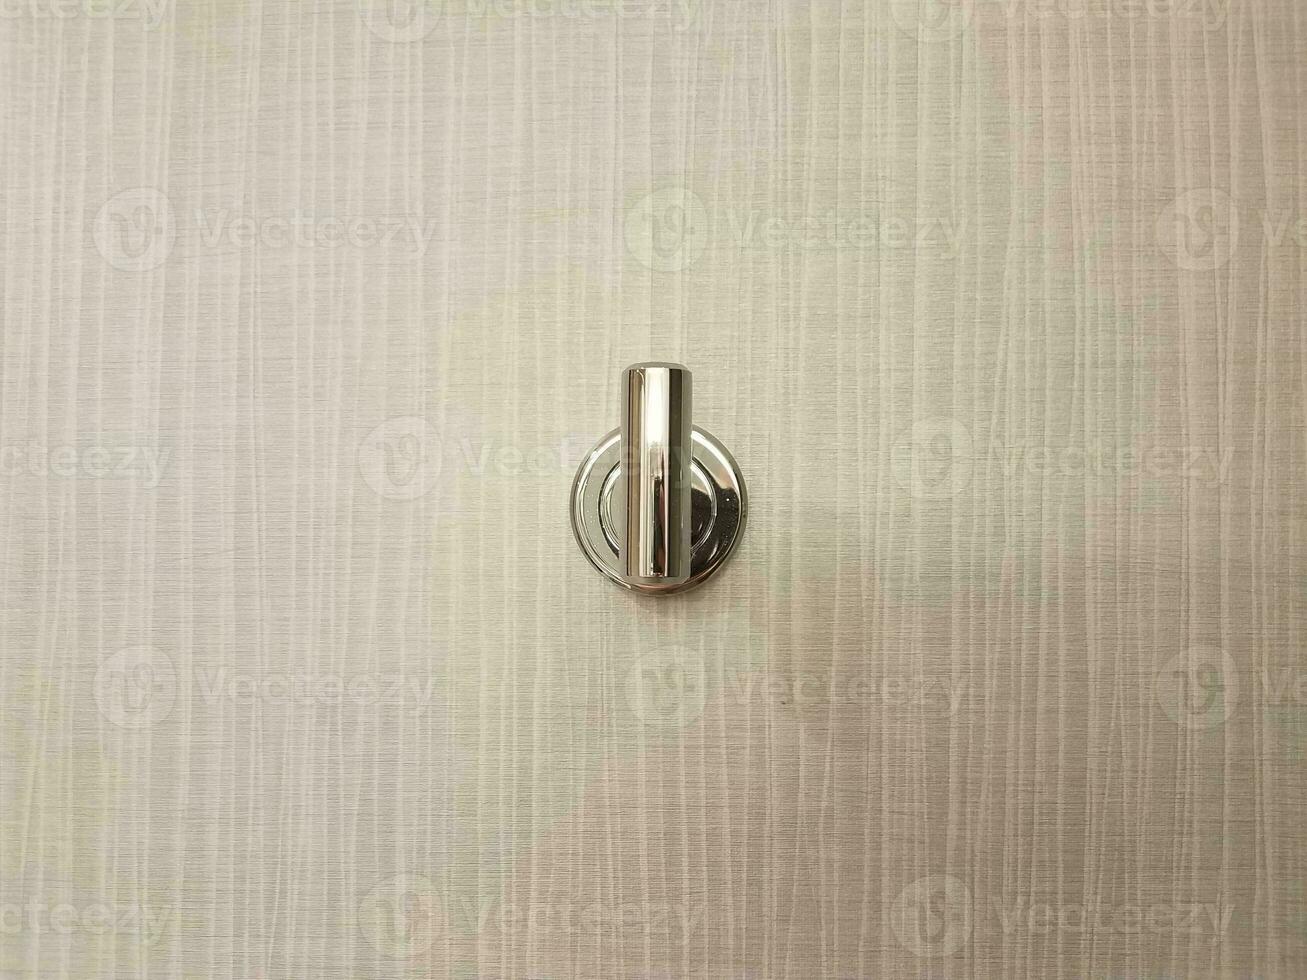 metalic metal coat hook or fixture on grey wall photo